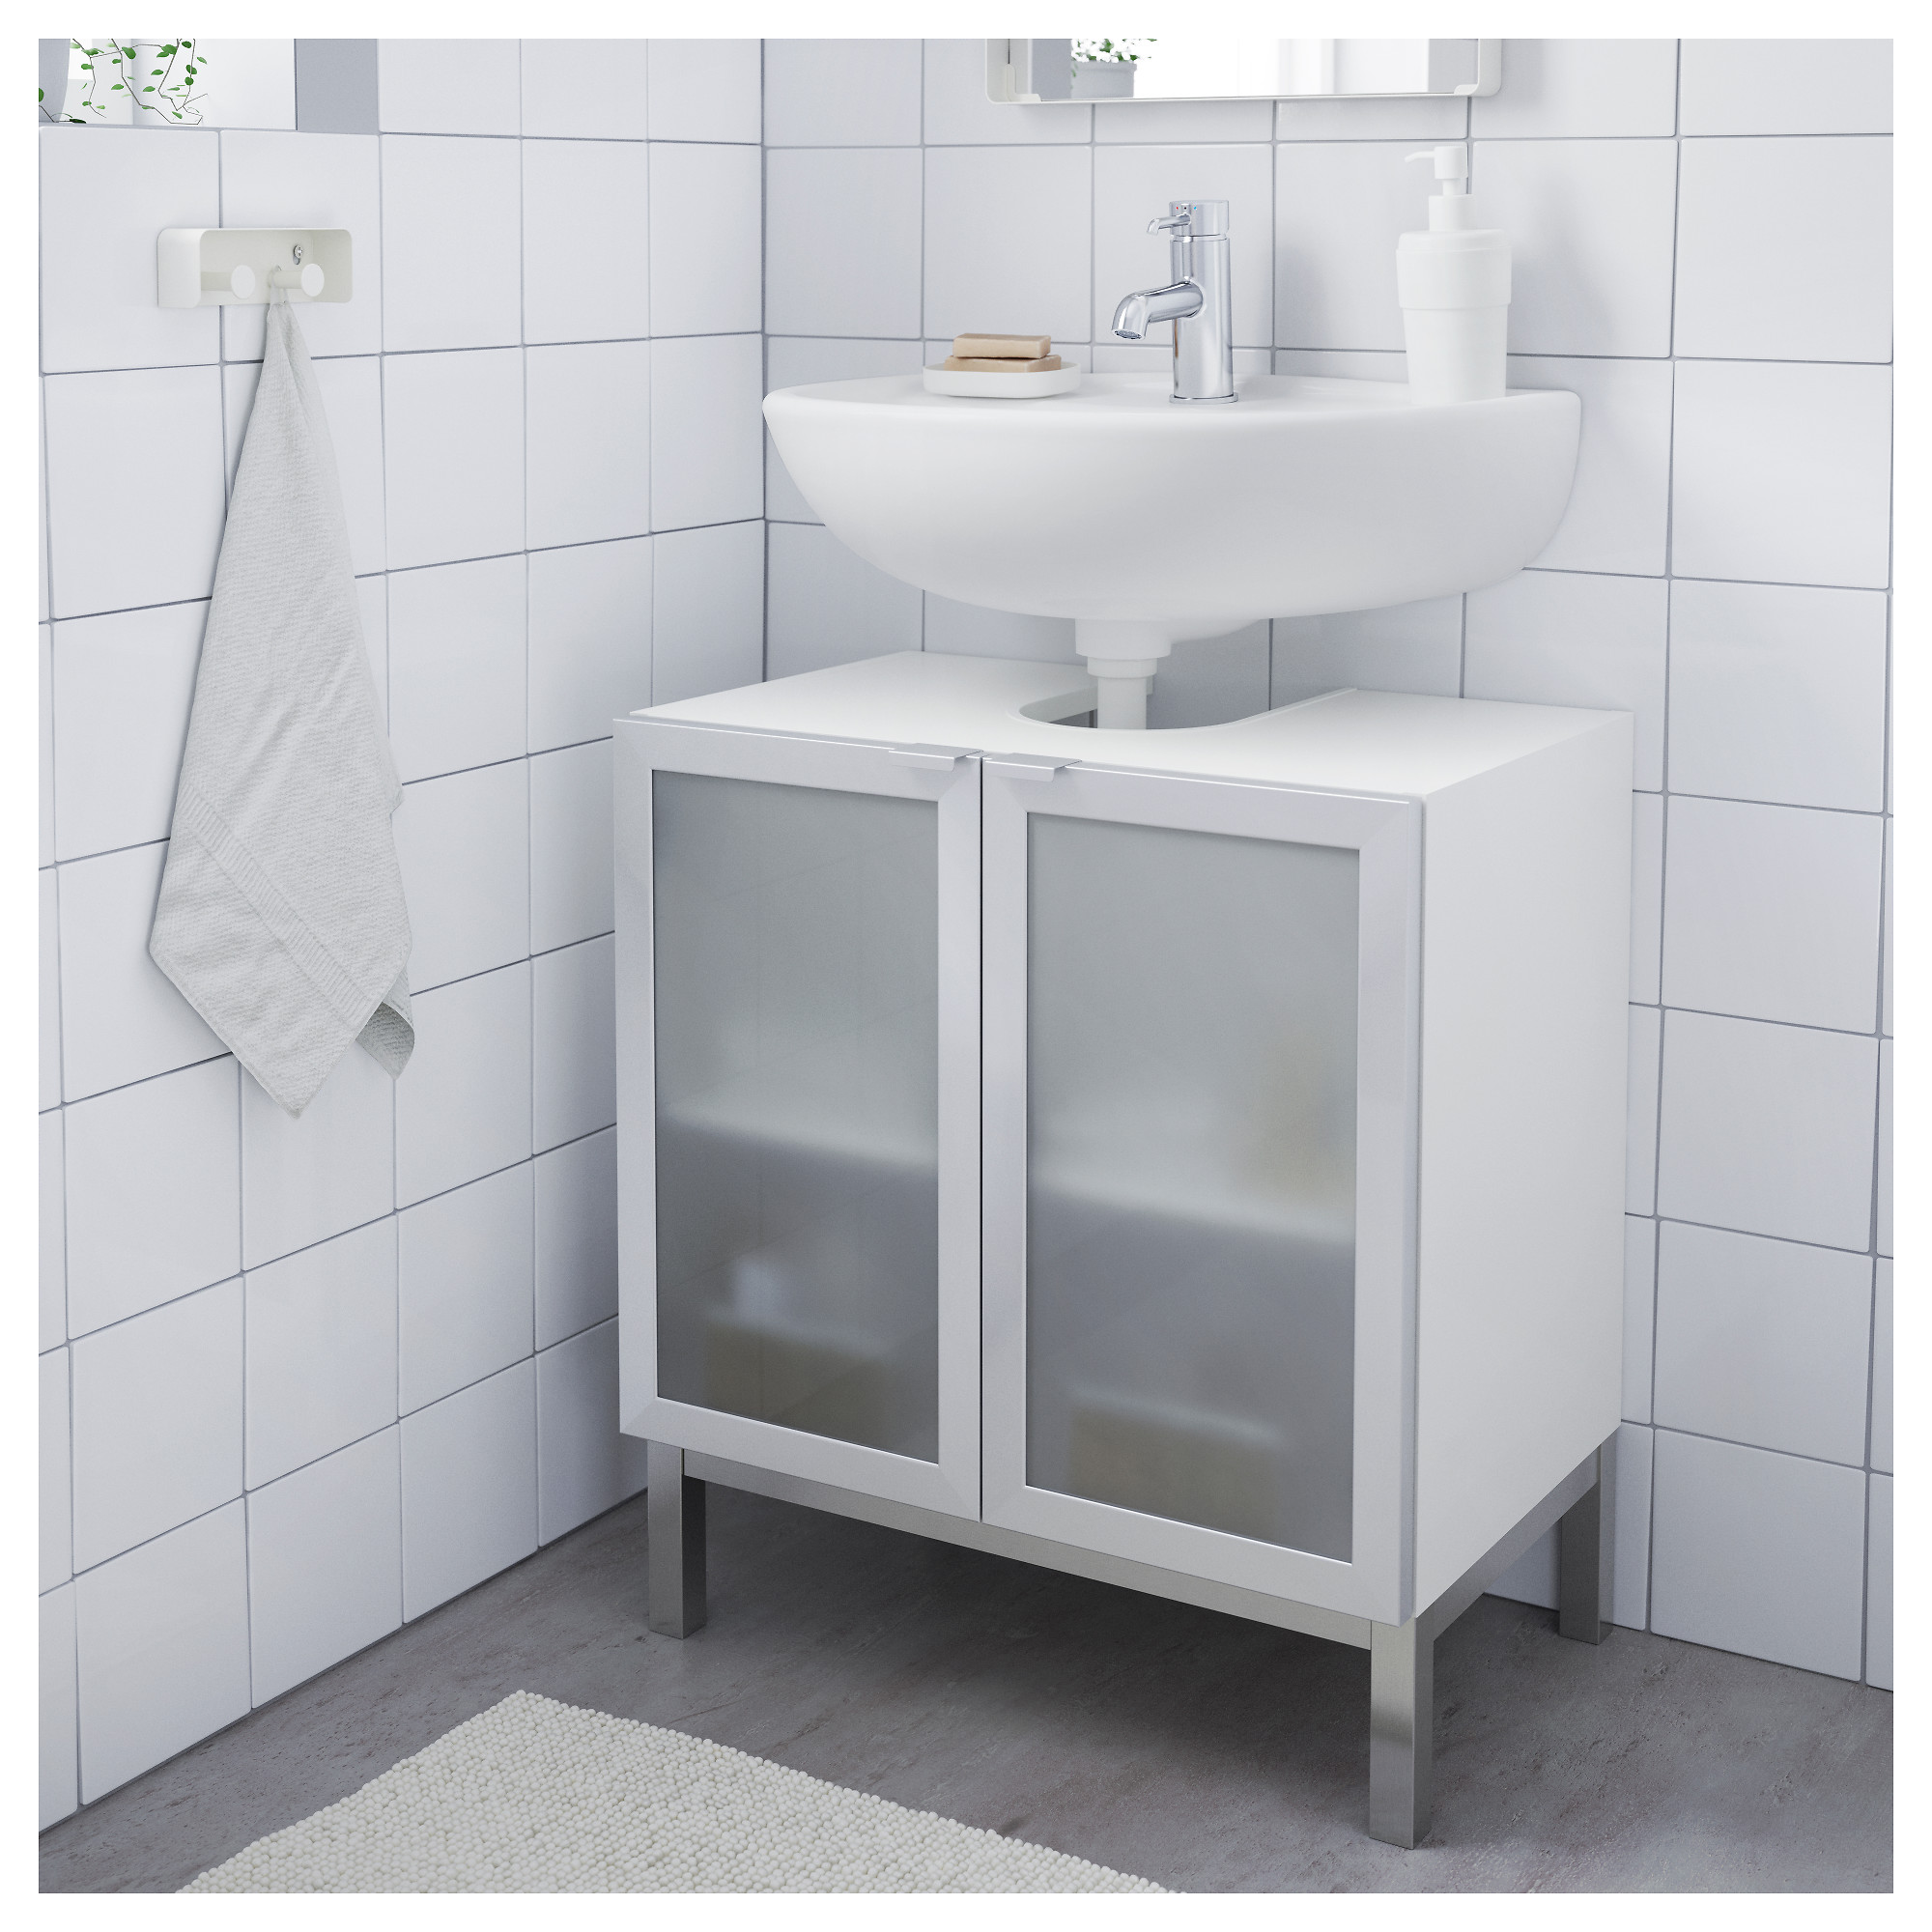 LILL NGEN  wash basin base cabinet w 2 doors white aluminium  IKEA  